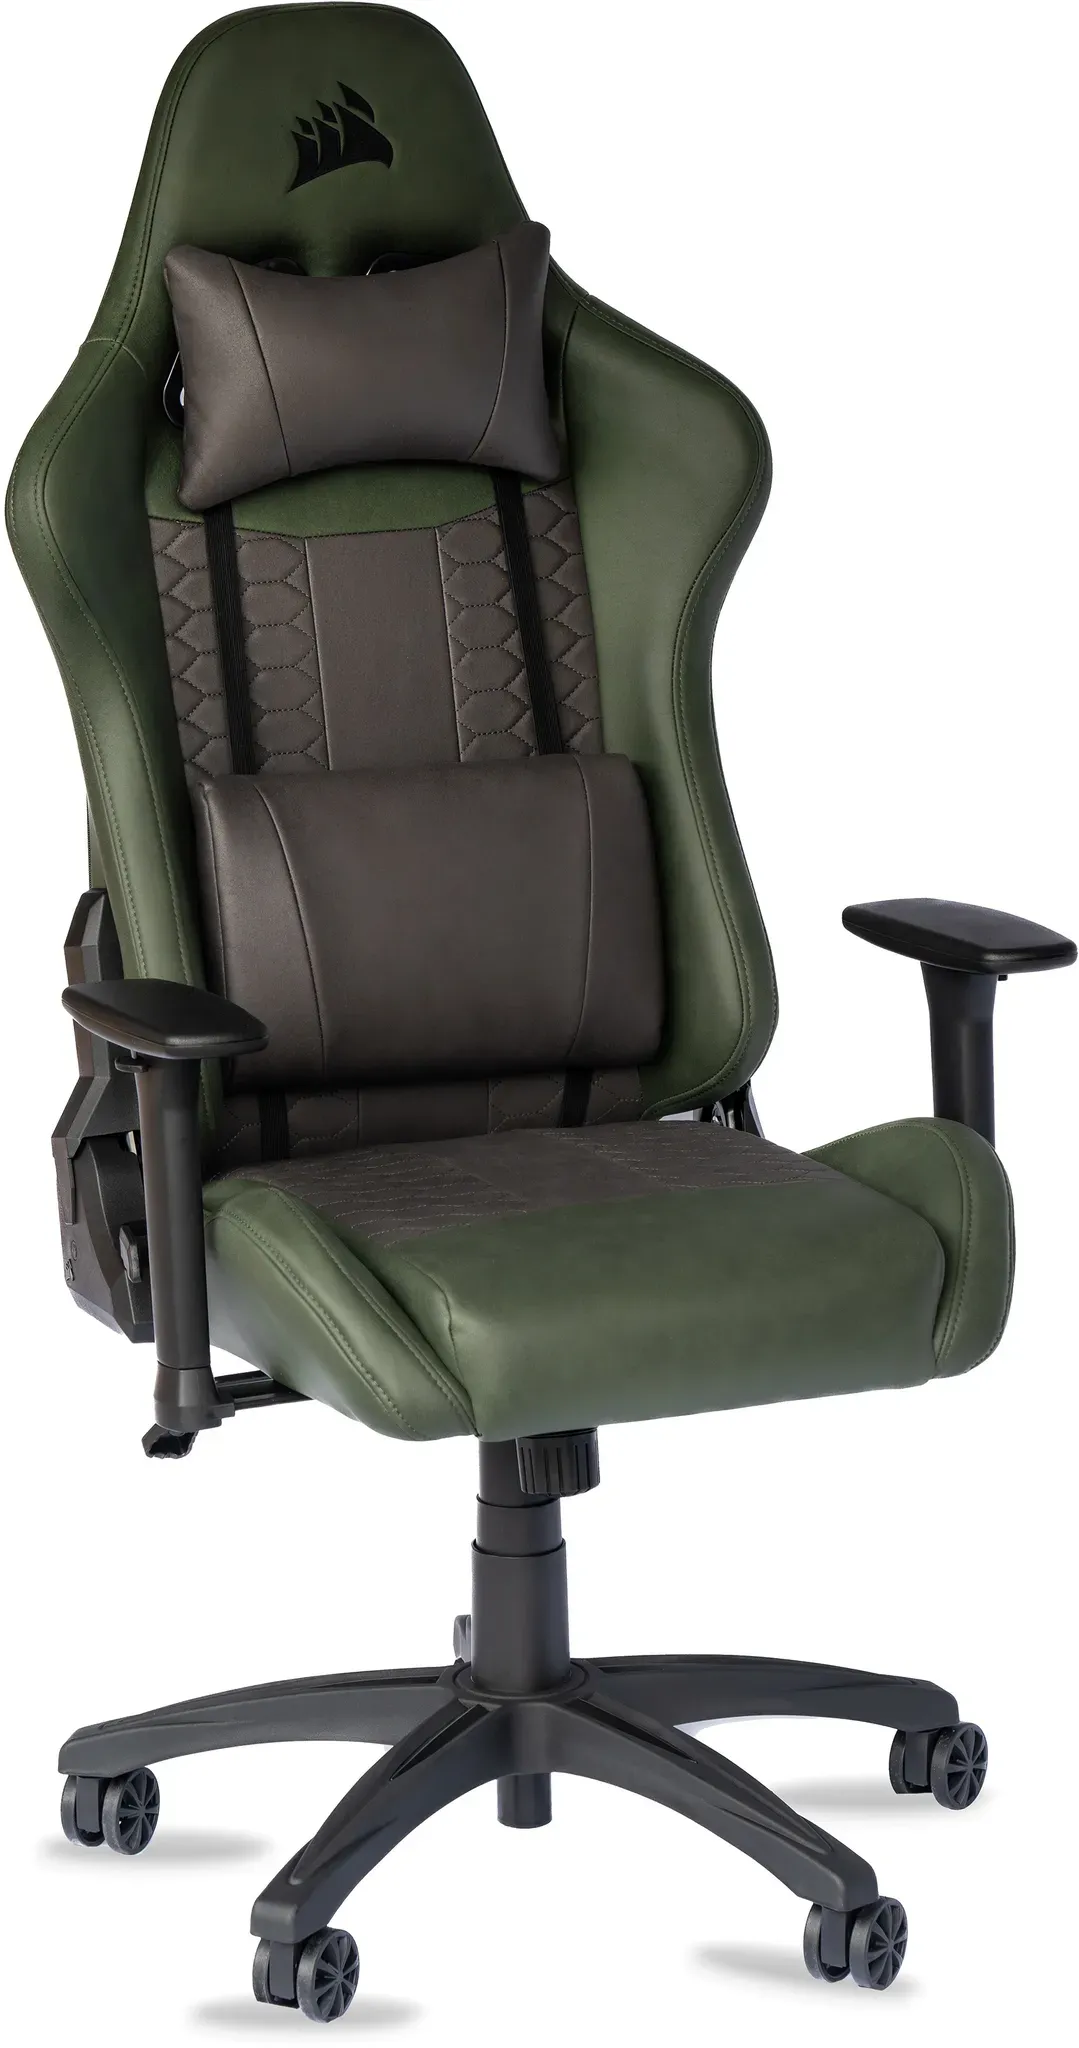 CORSAIR Gaming-Stuhl "TC100 Relaxed - Stoff Toxic Green" Stühle Verstellbare Armlehnen für optimalen Komfort Gr. B/H/T: 84 cm x 33 cm x 66 cm, Stoff, Nylon, to x ic green, green Gamingstühle